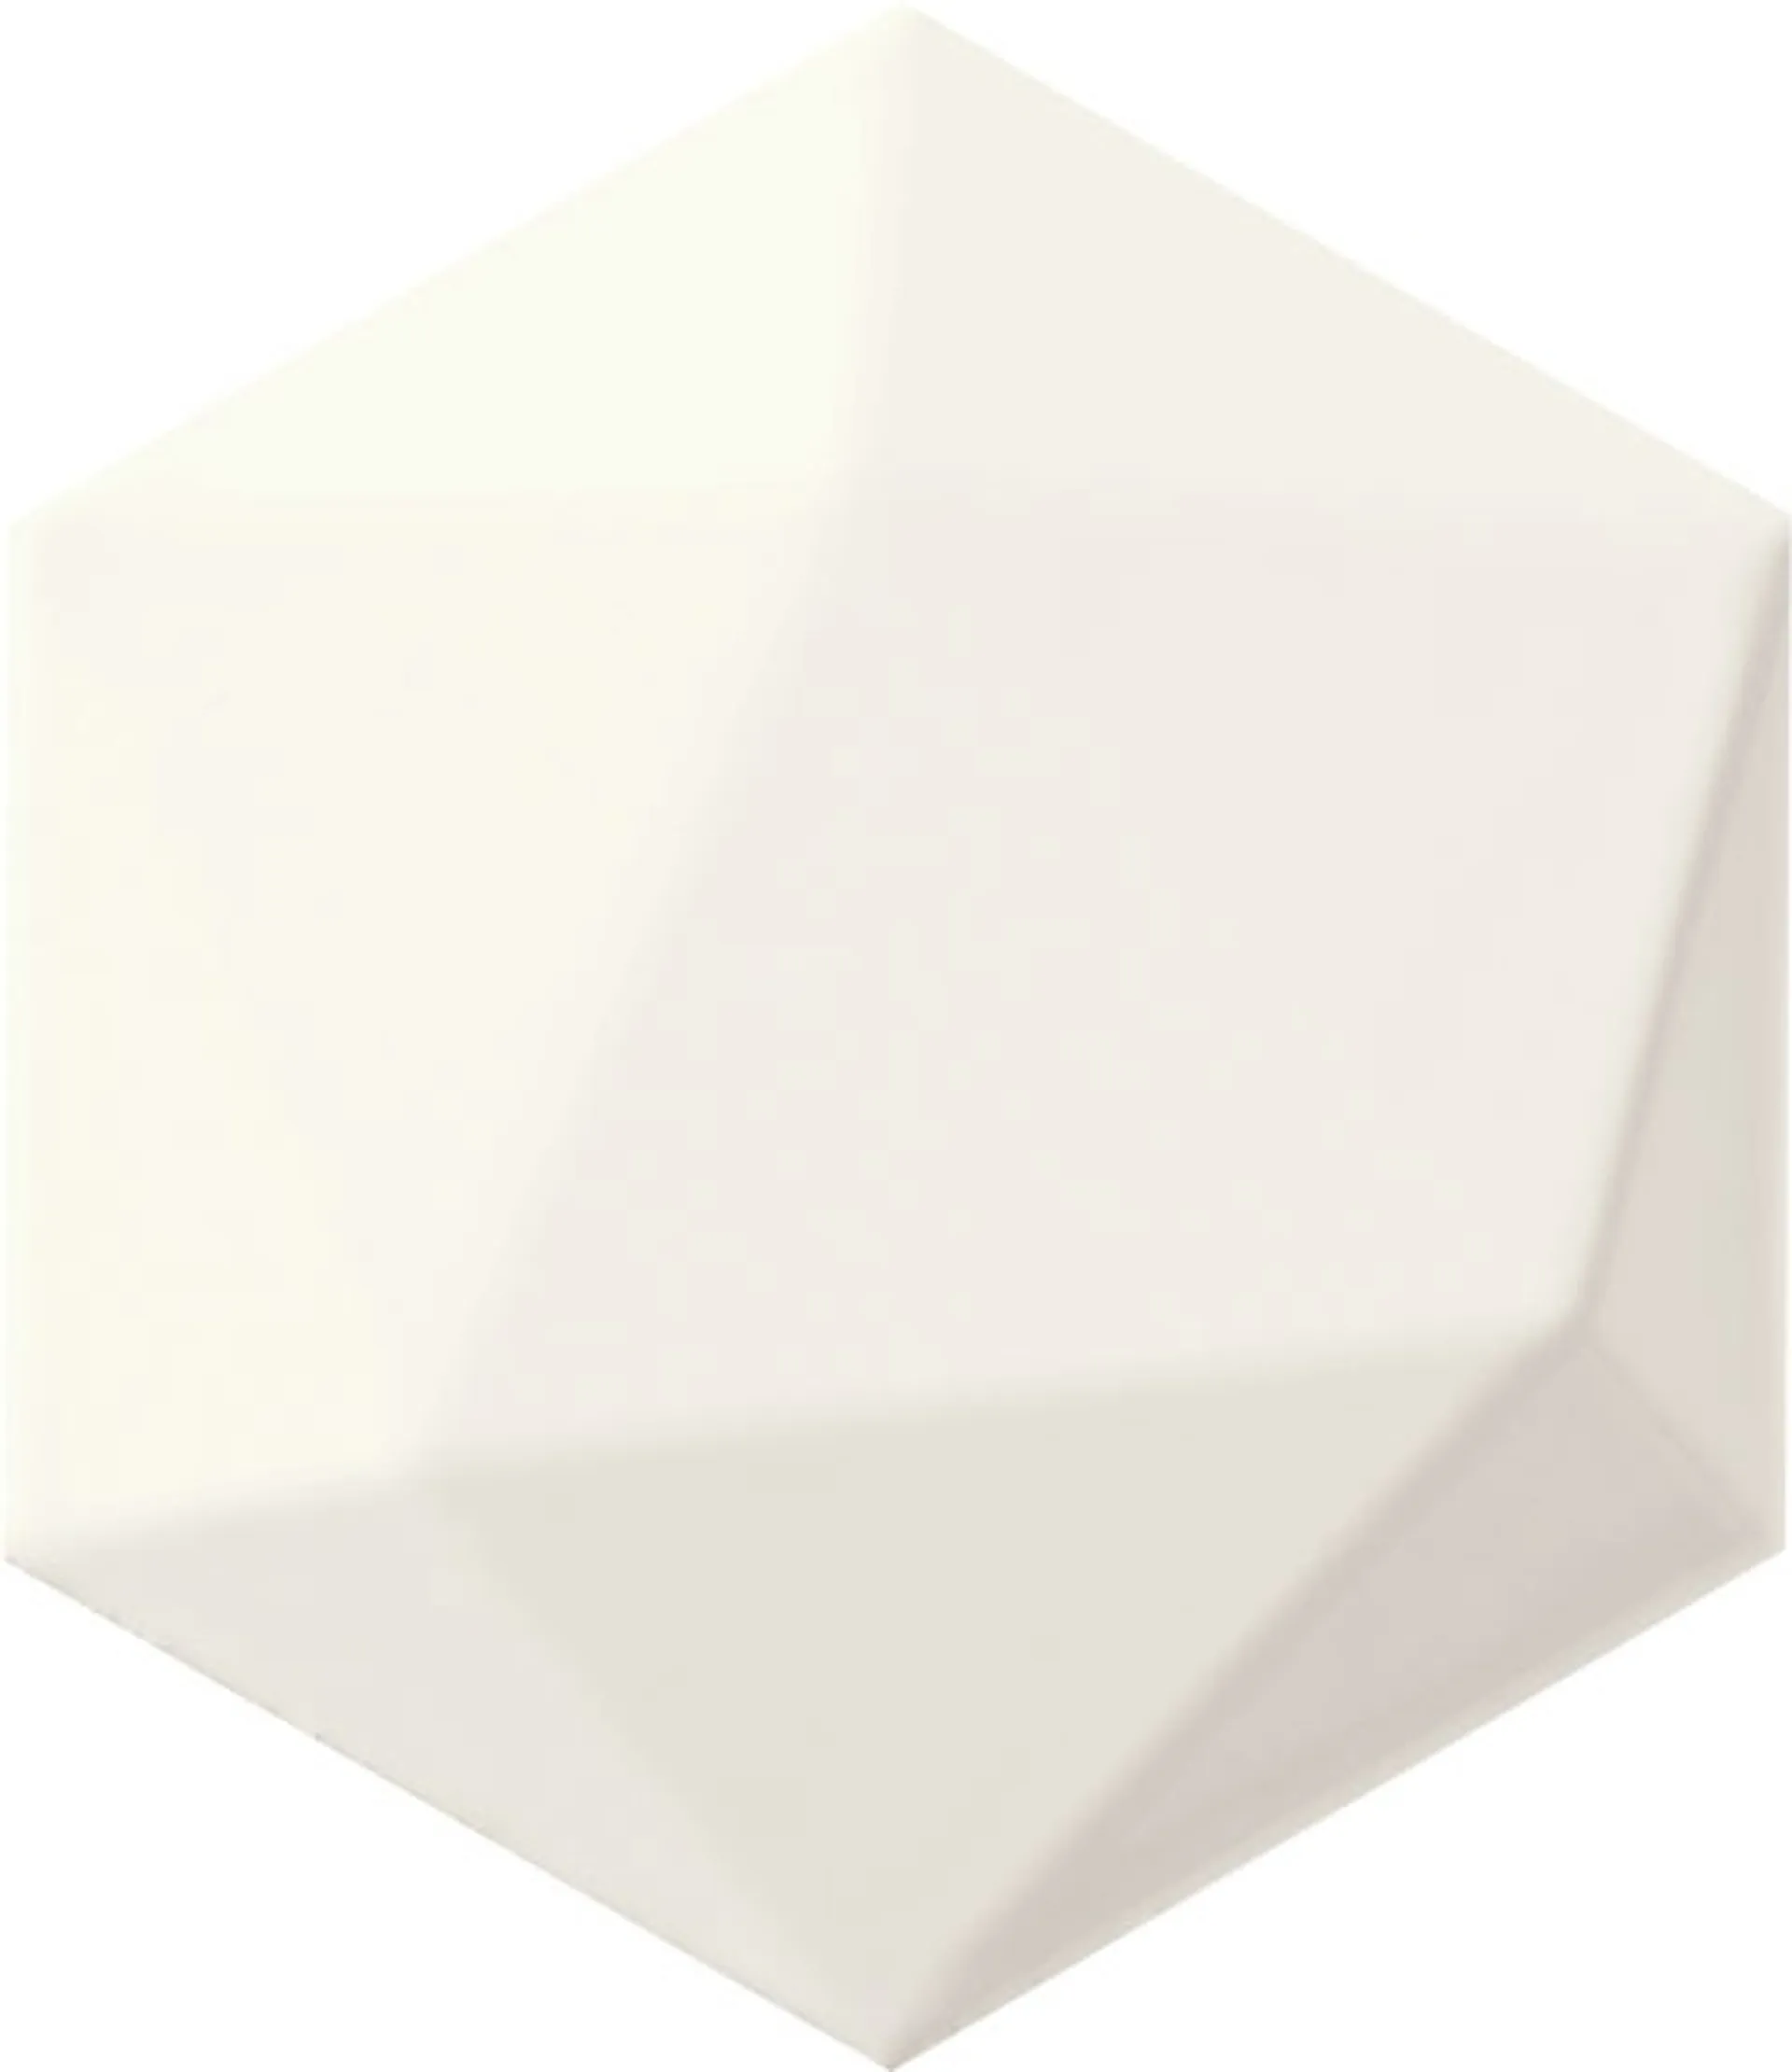 Glazura Polare white hex rectified 11x12,5 Arte